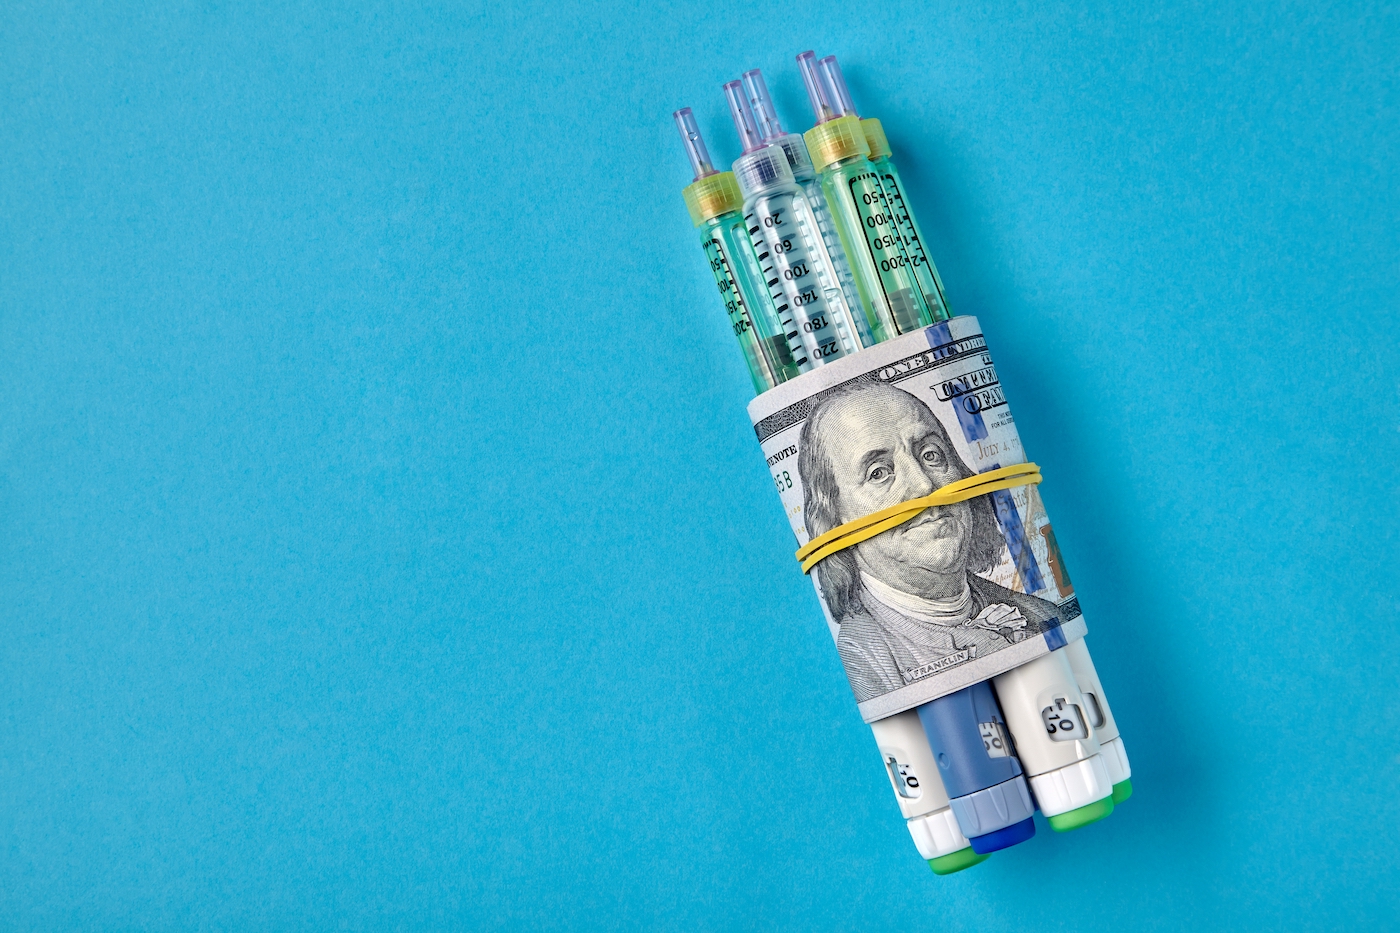 Insulin syringes wrapped in hundred dollar bills, blue background.